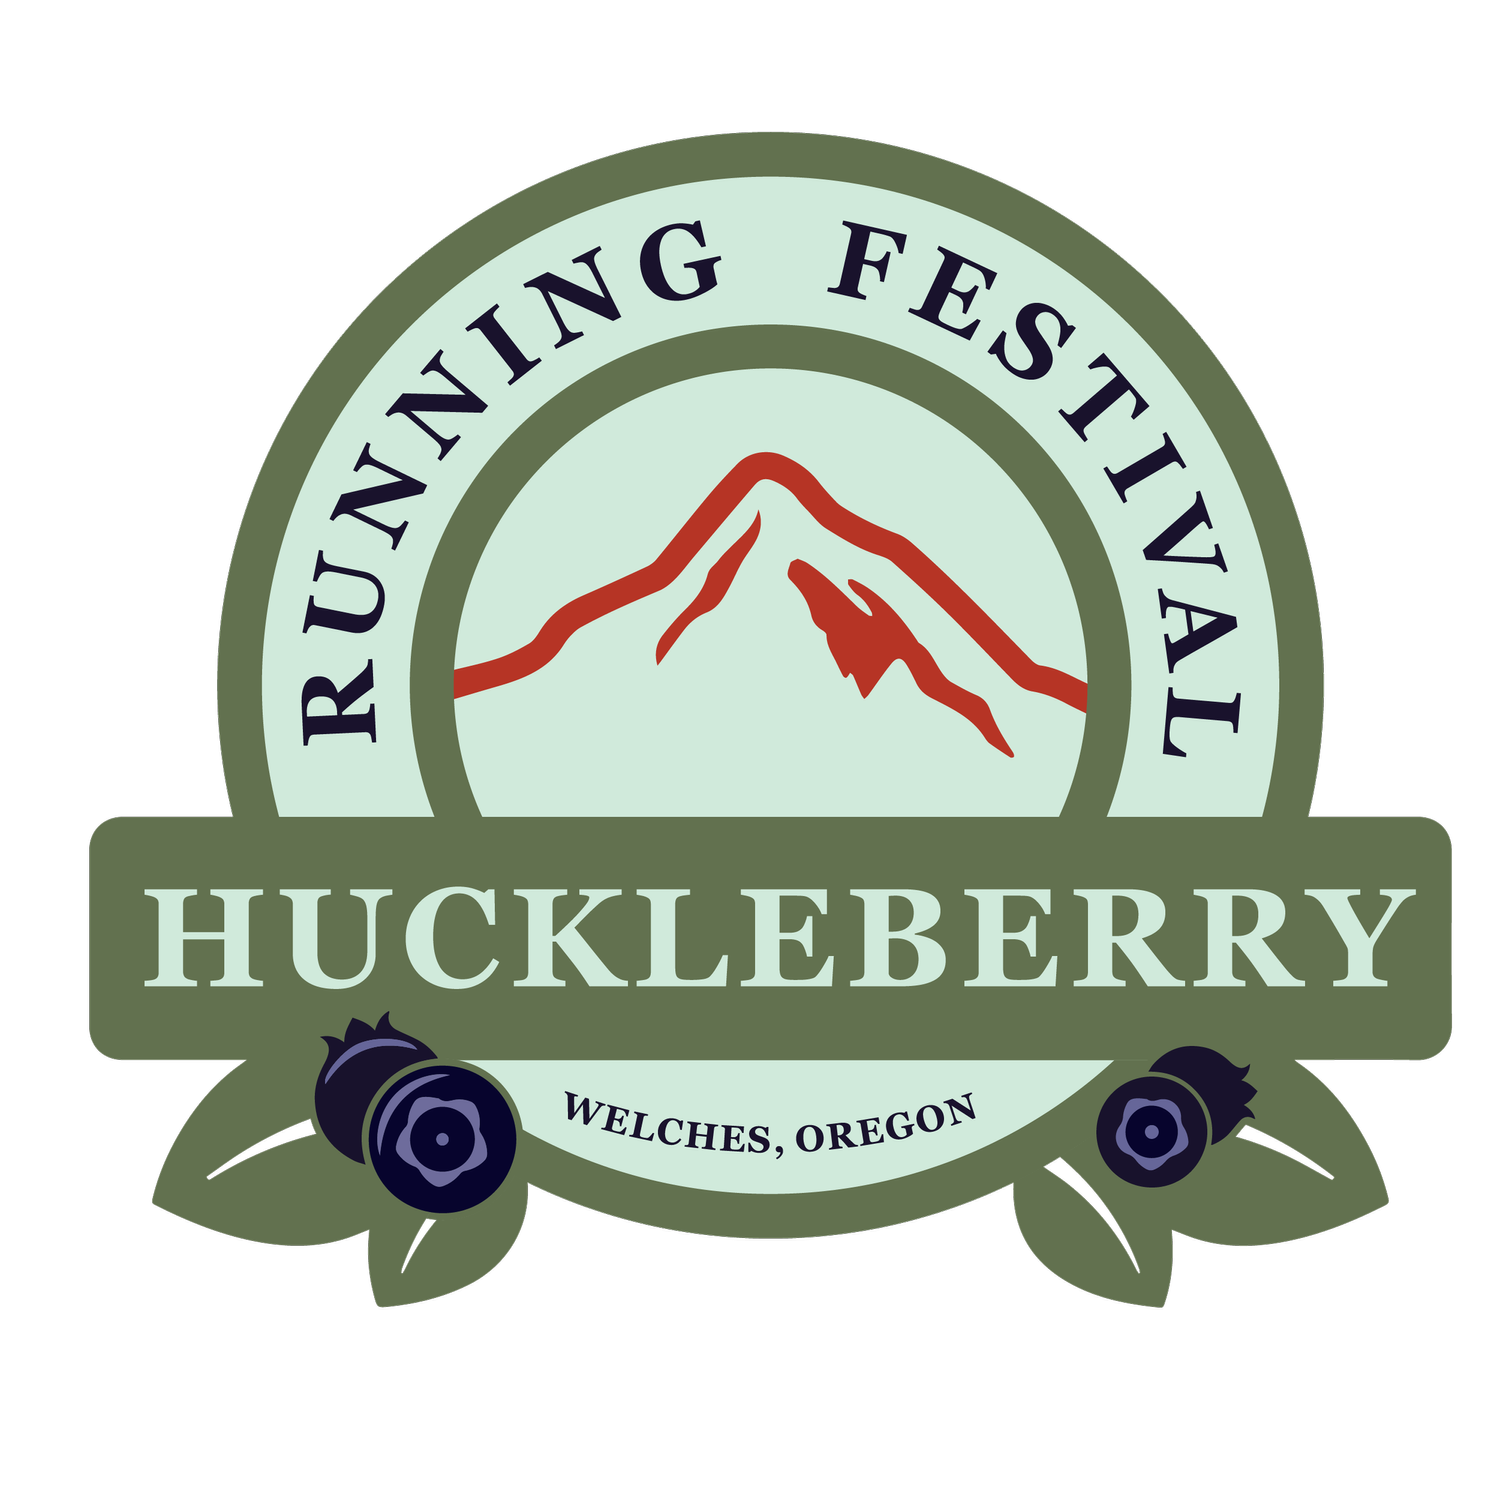 Huckleberry Run Festival